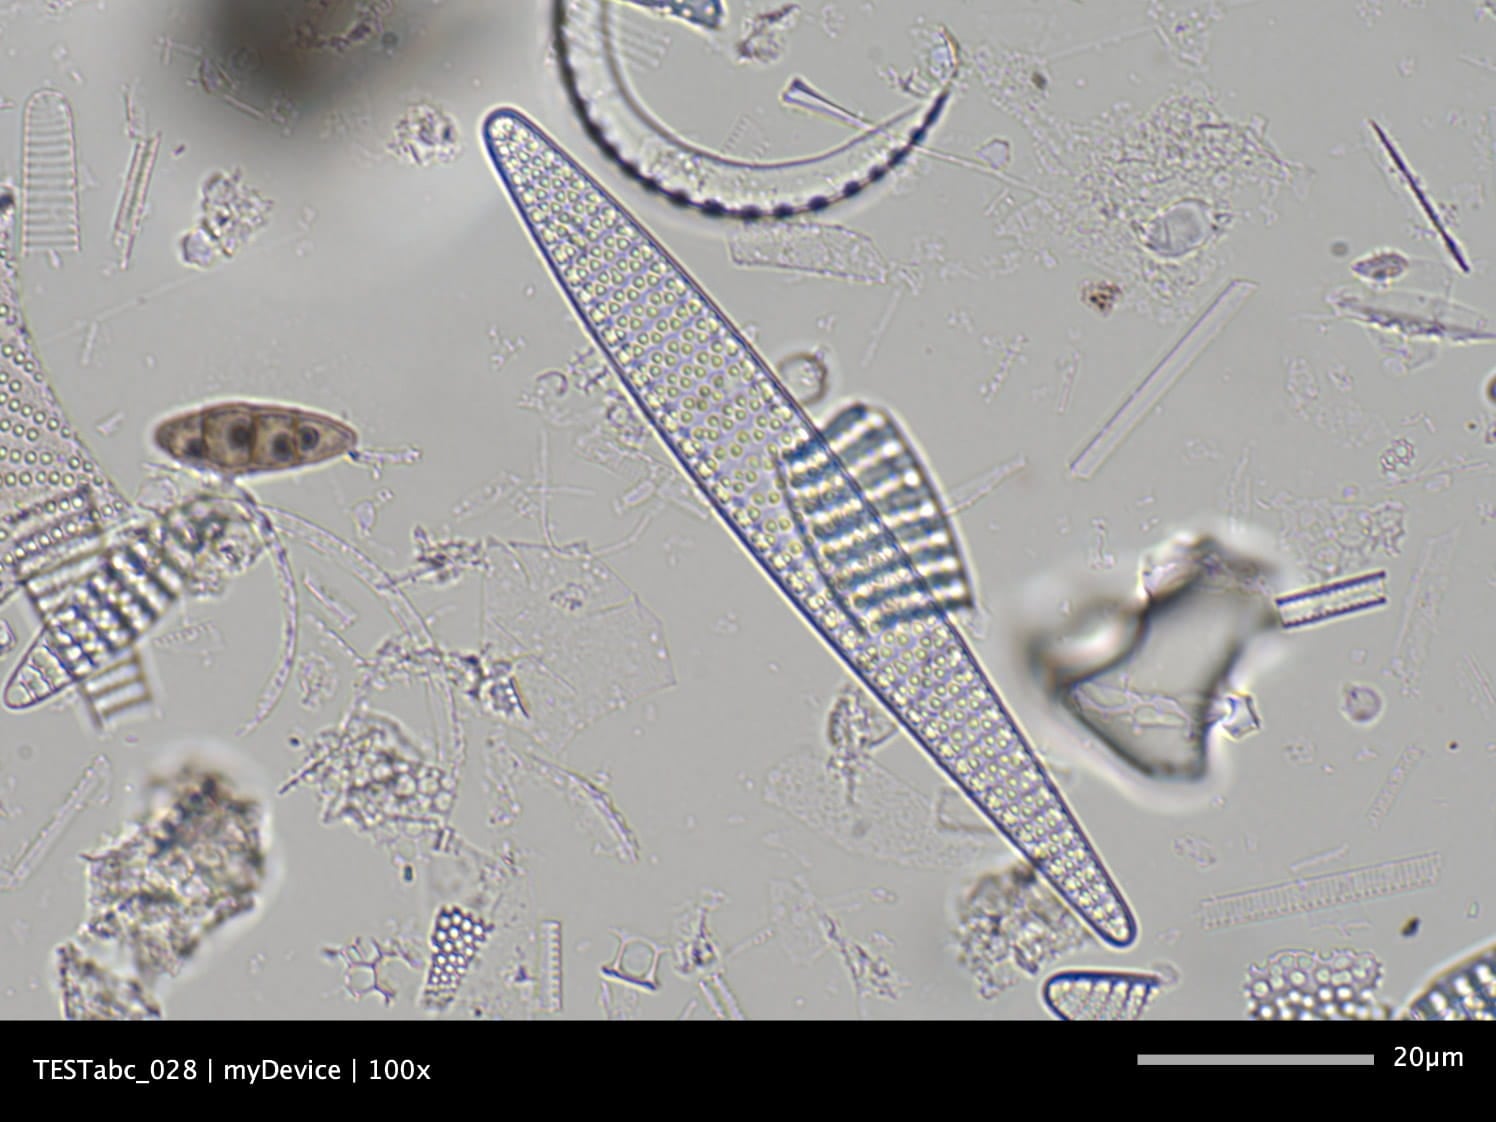 Microscope Image